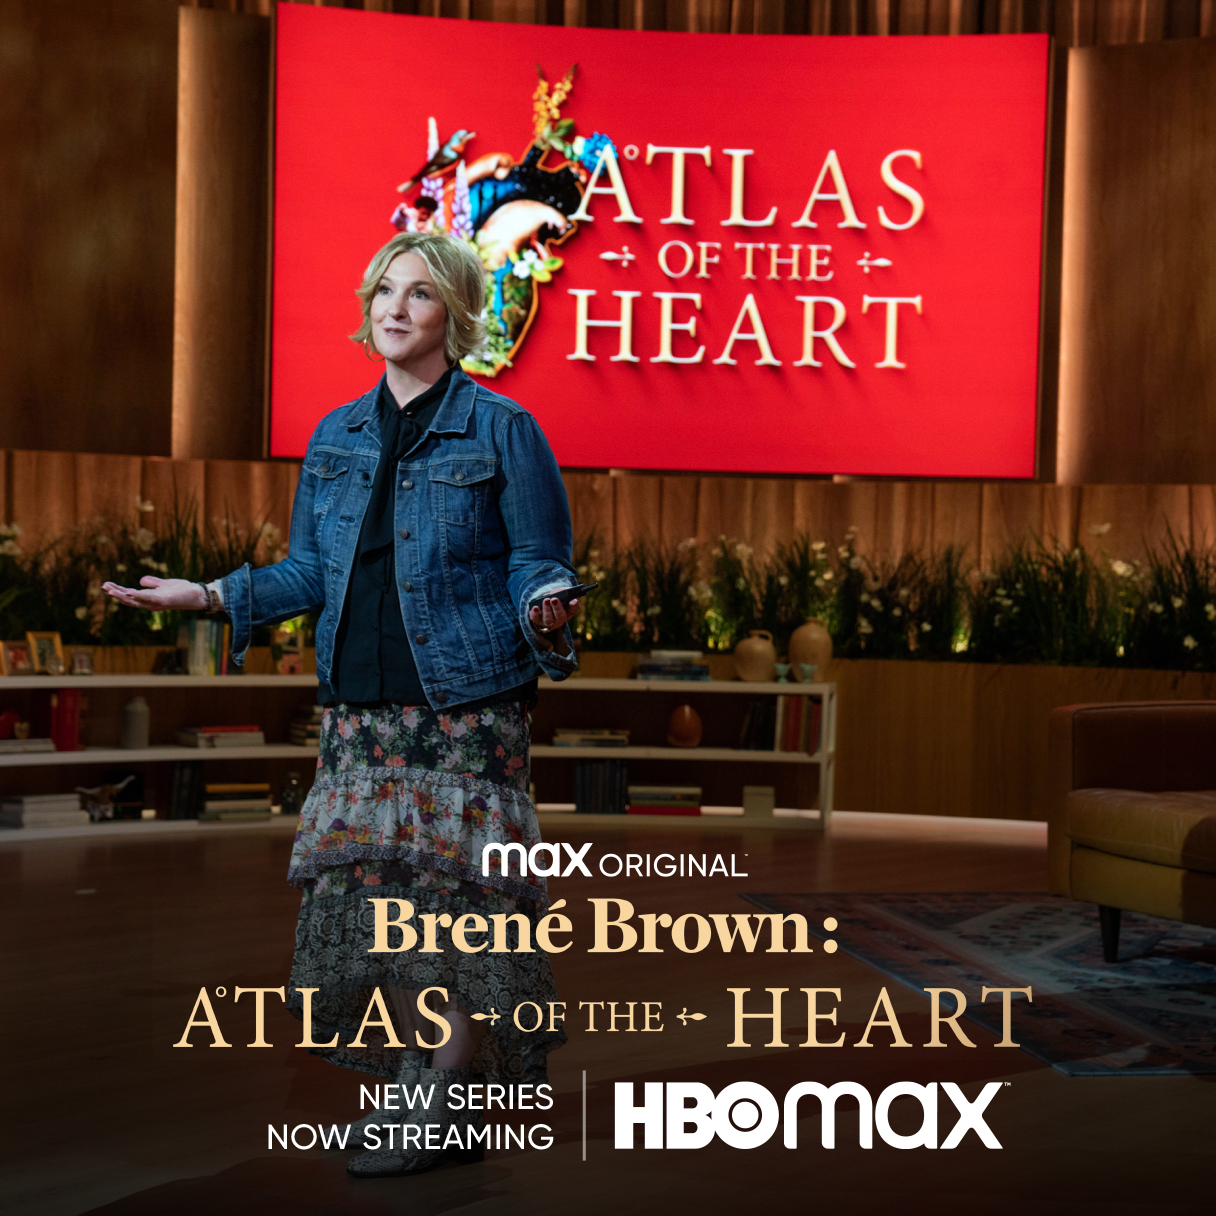 Brene Brown, Atlas of the Heart on HBO Max